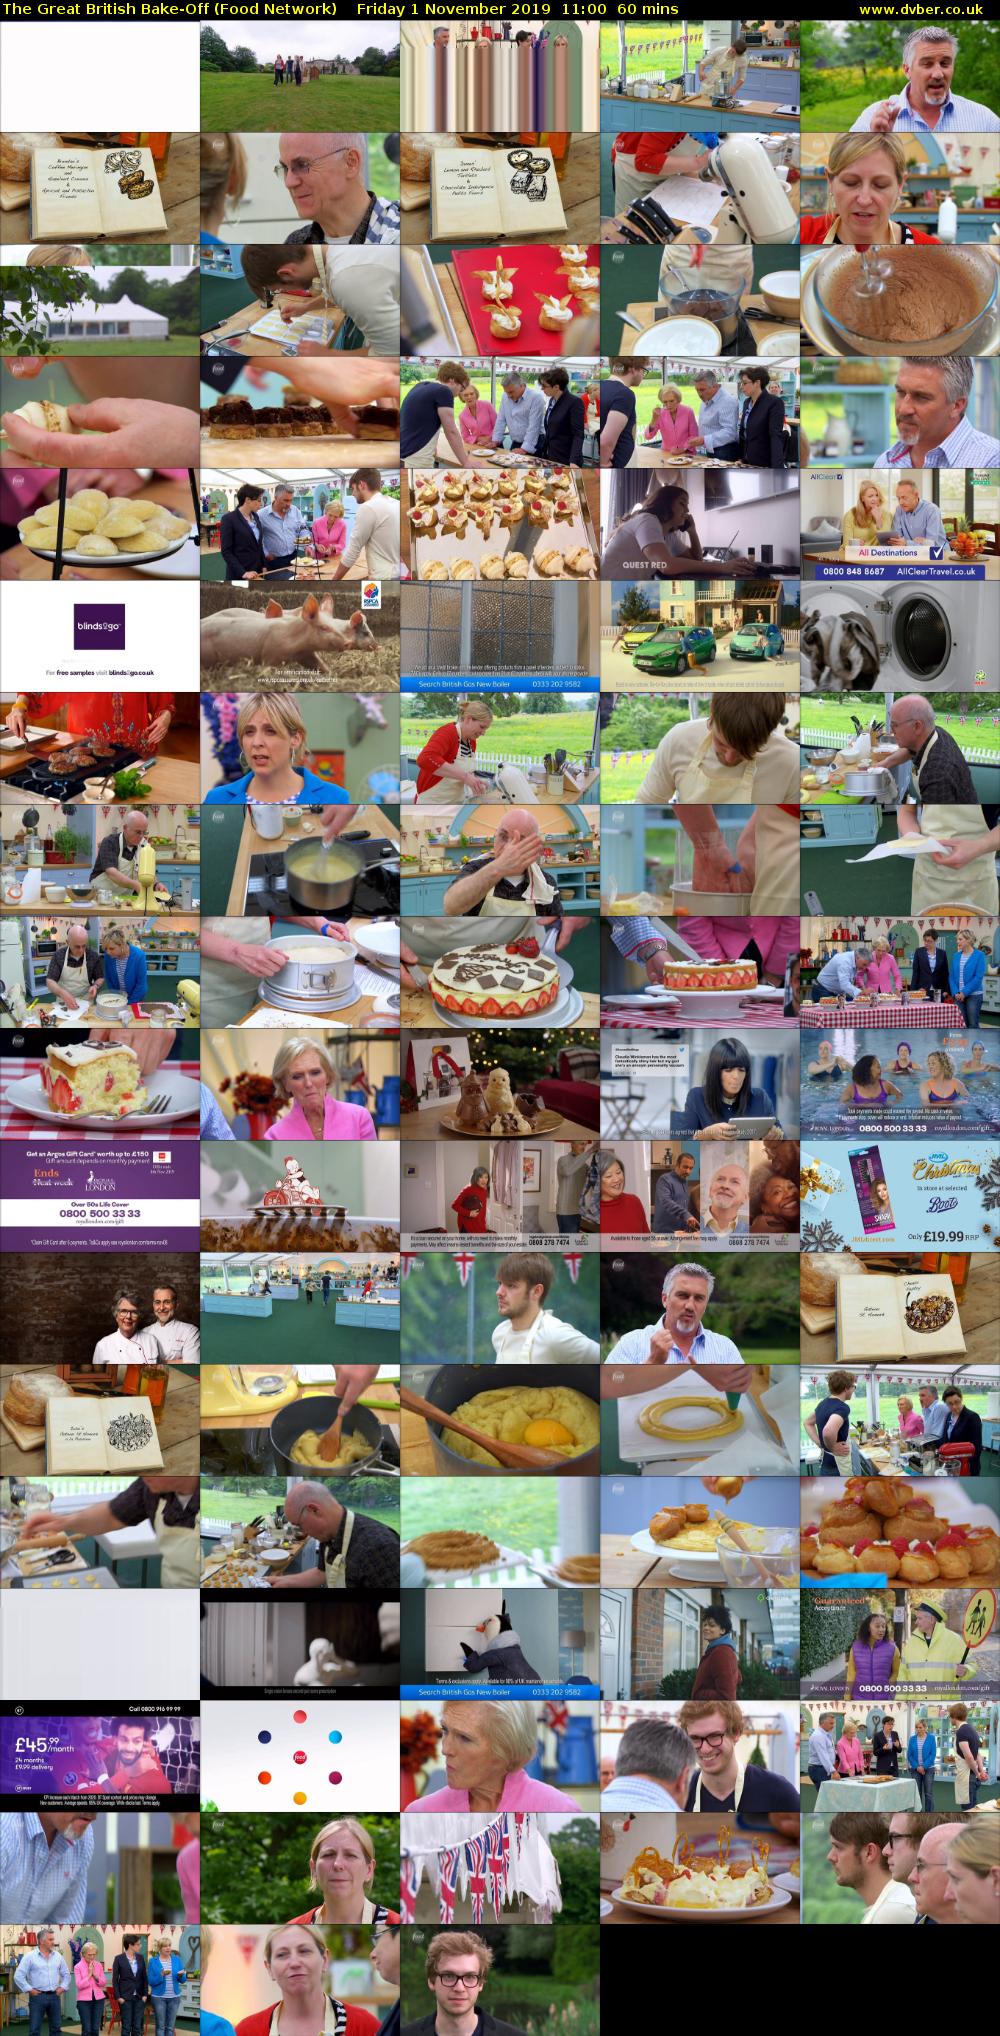 The Great British Bake-Off (Food Network) Friday 1 November 2019 11:00 - 12:00